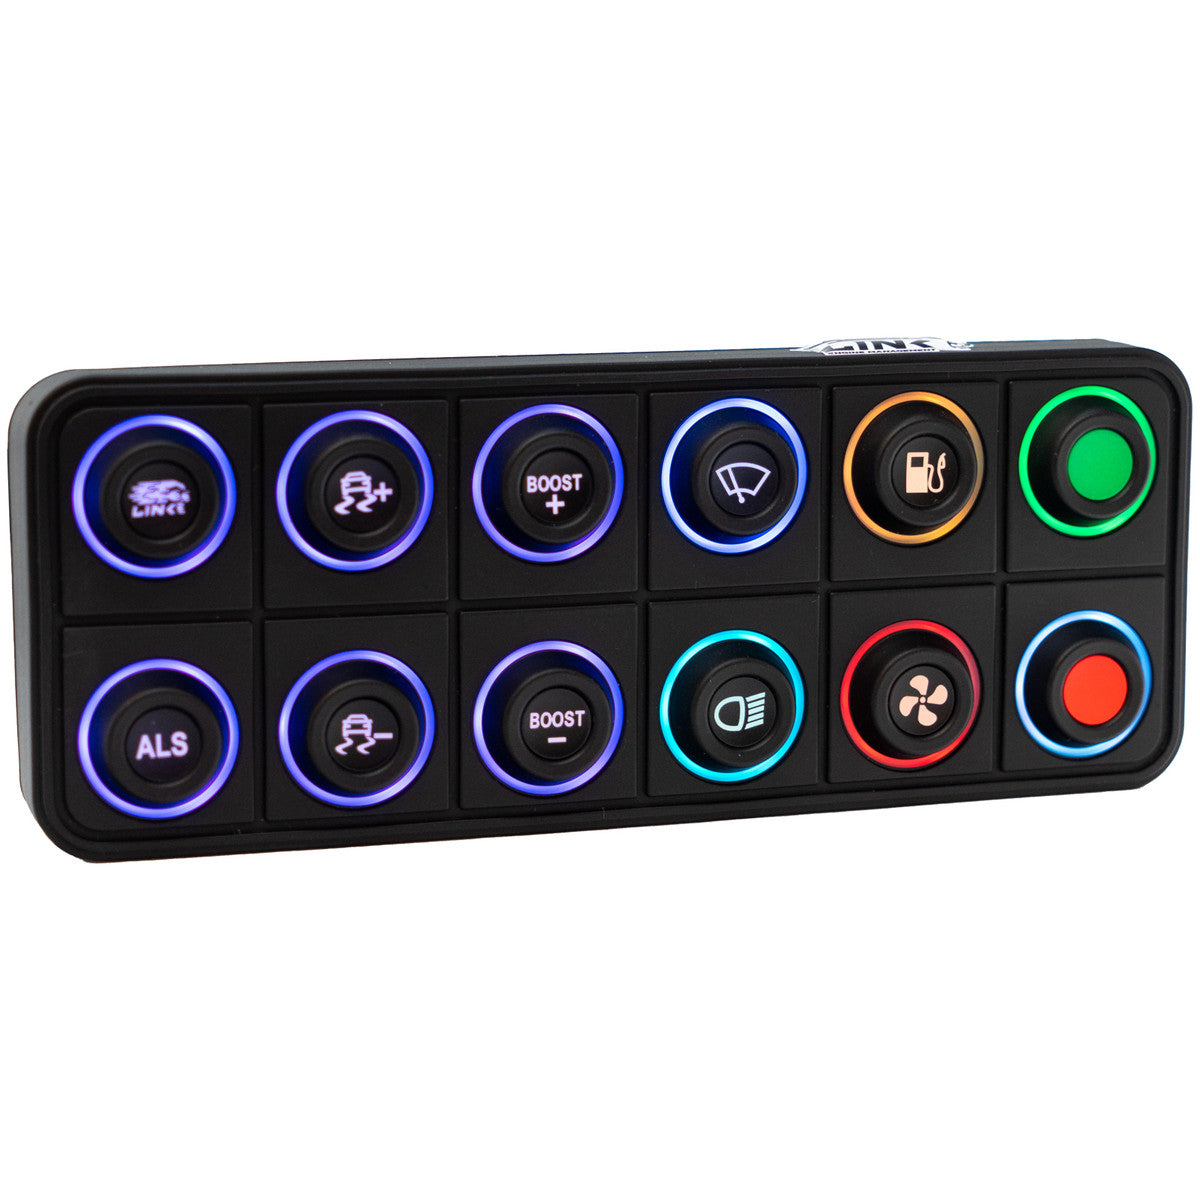 Link ECU CAN Keypad 12 button